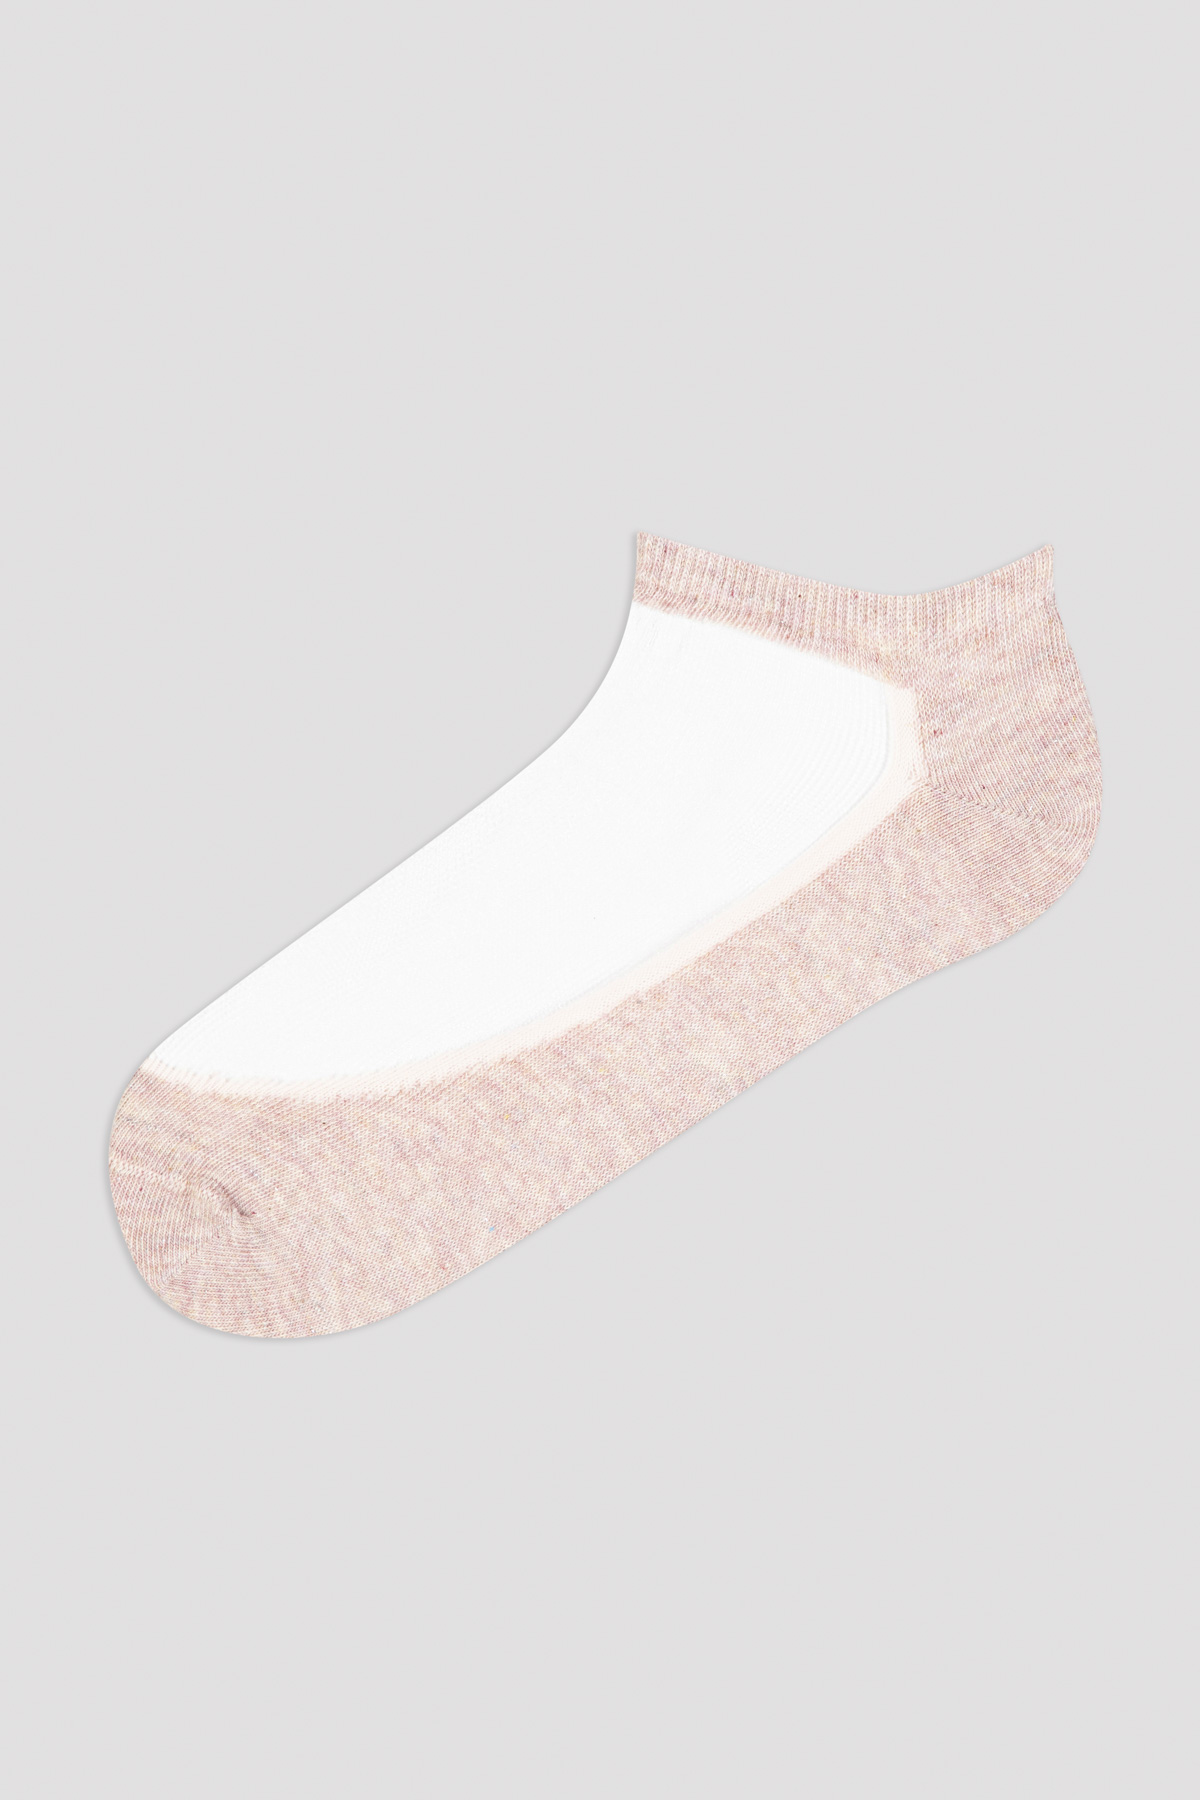 Penti Pink Top File Babet Socks. 1